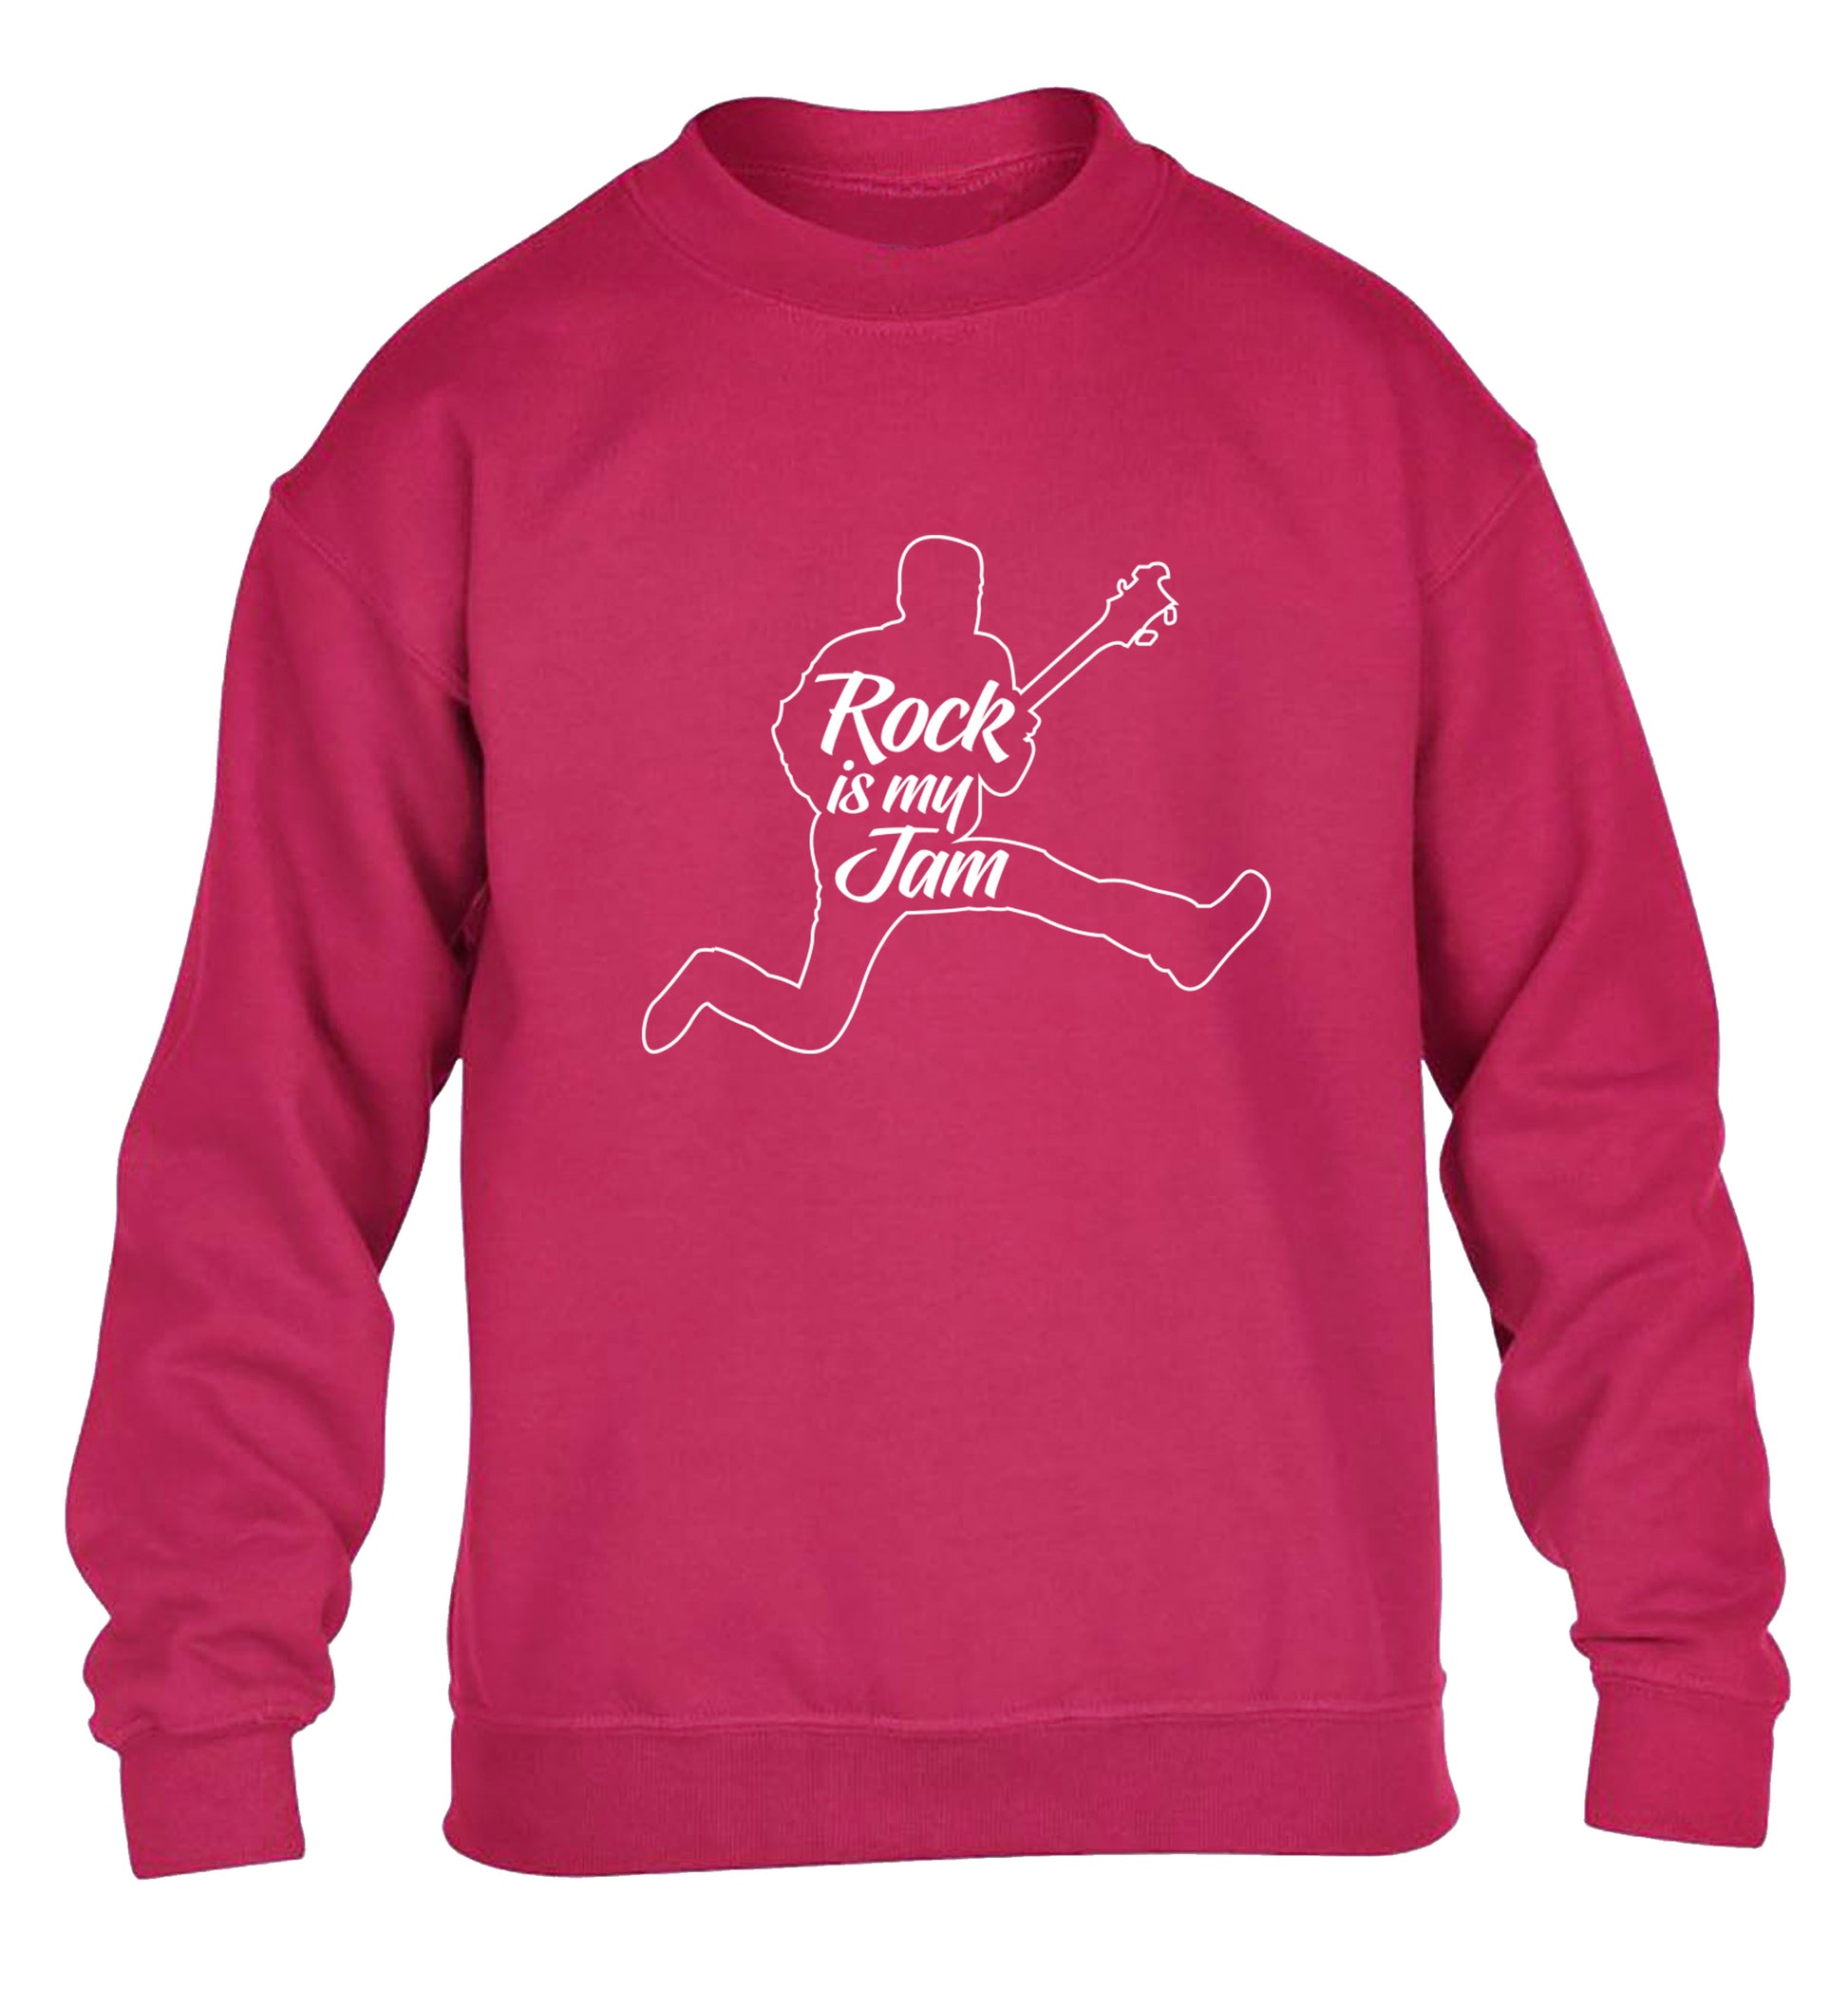 Rock is my jam children's pink sweater 12-13 Years